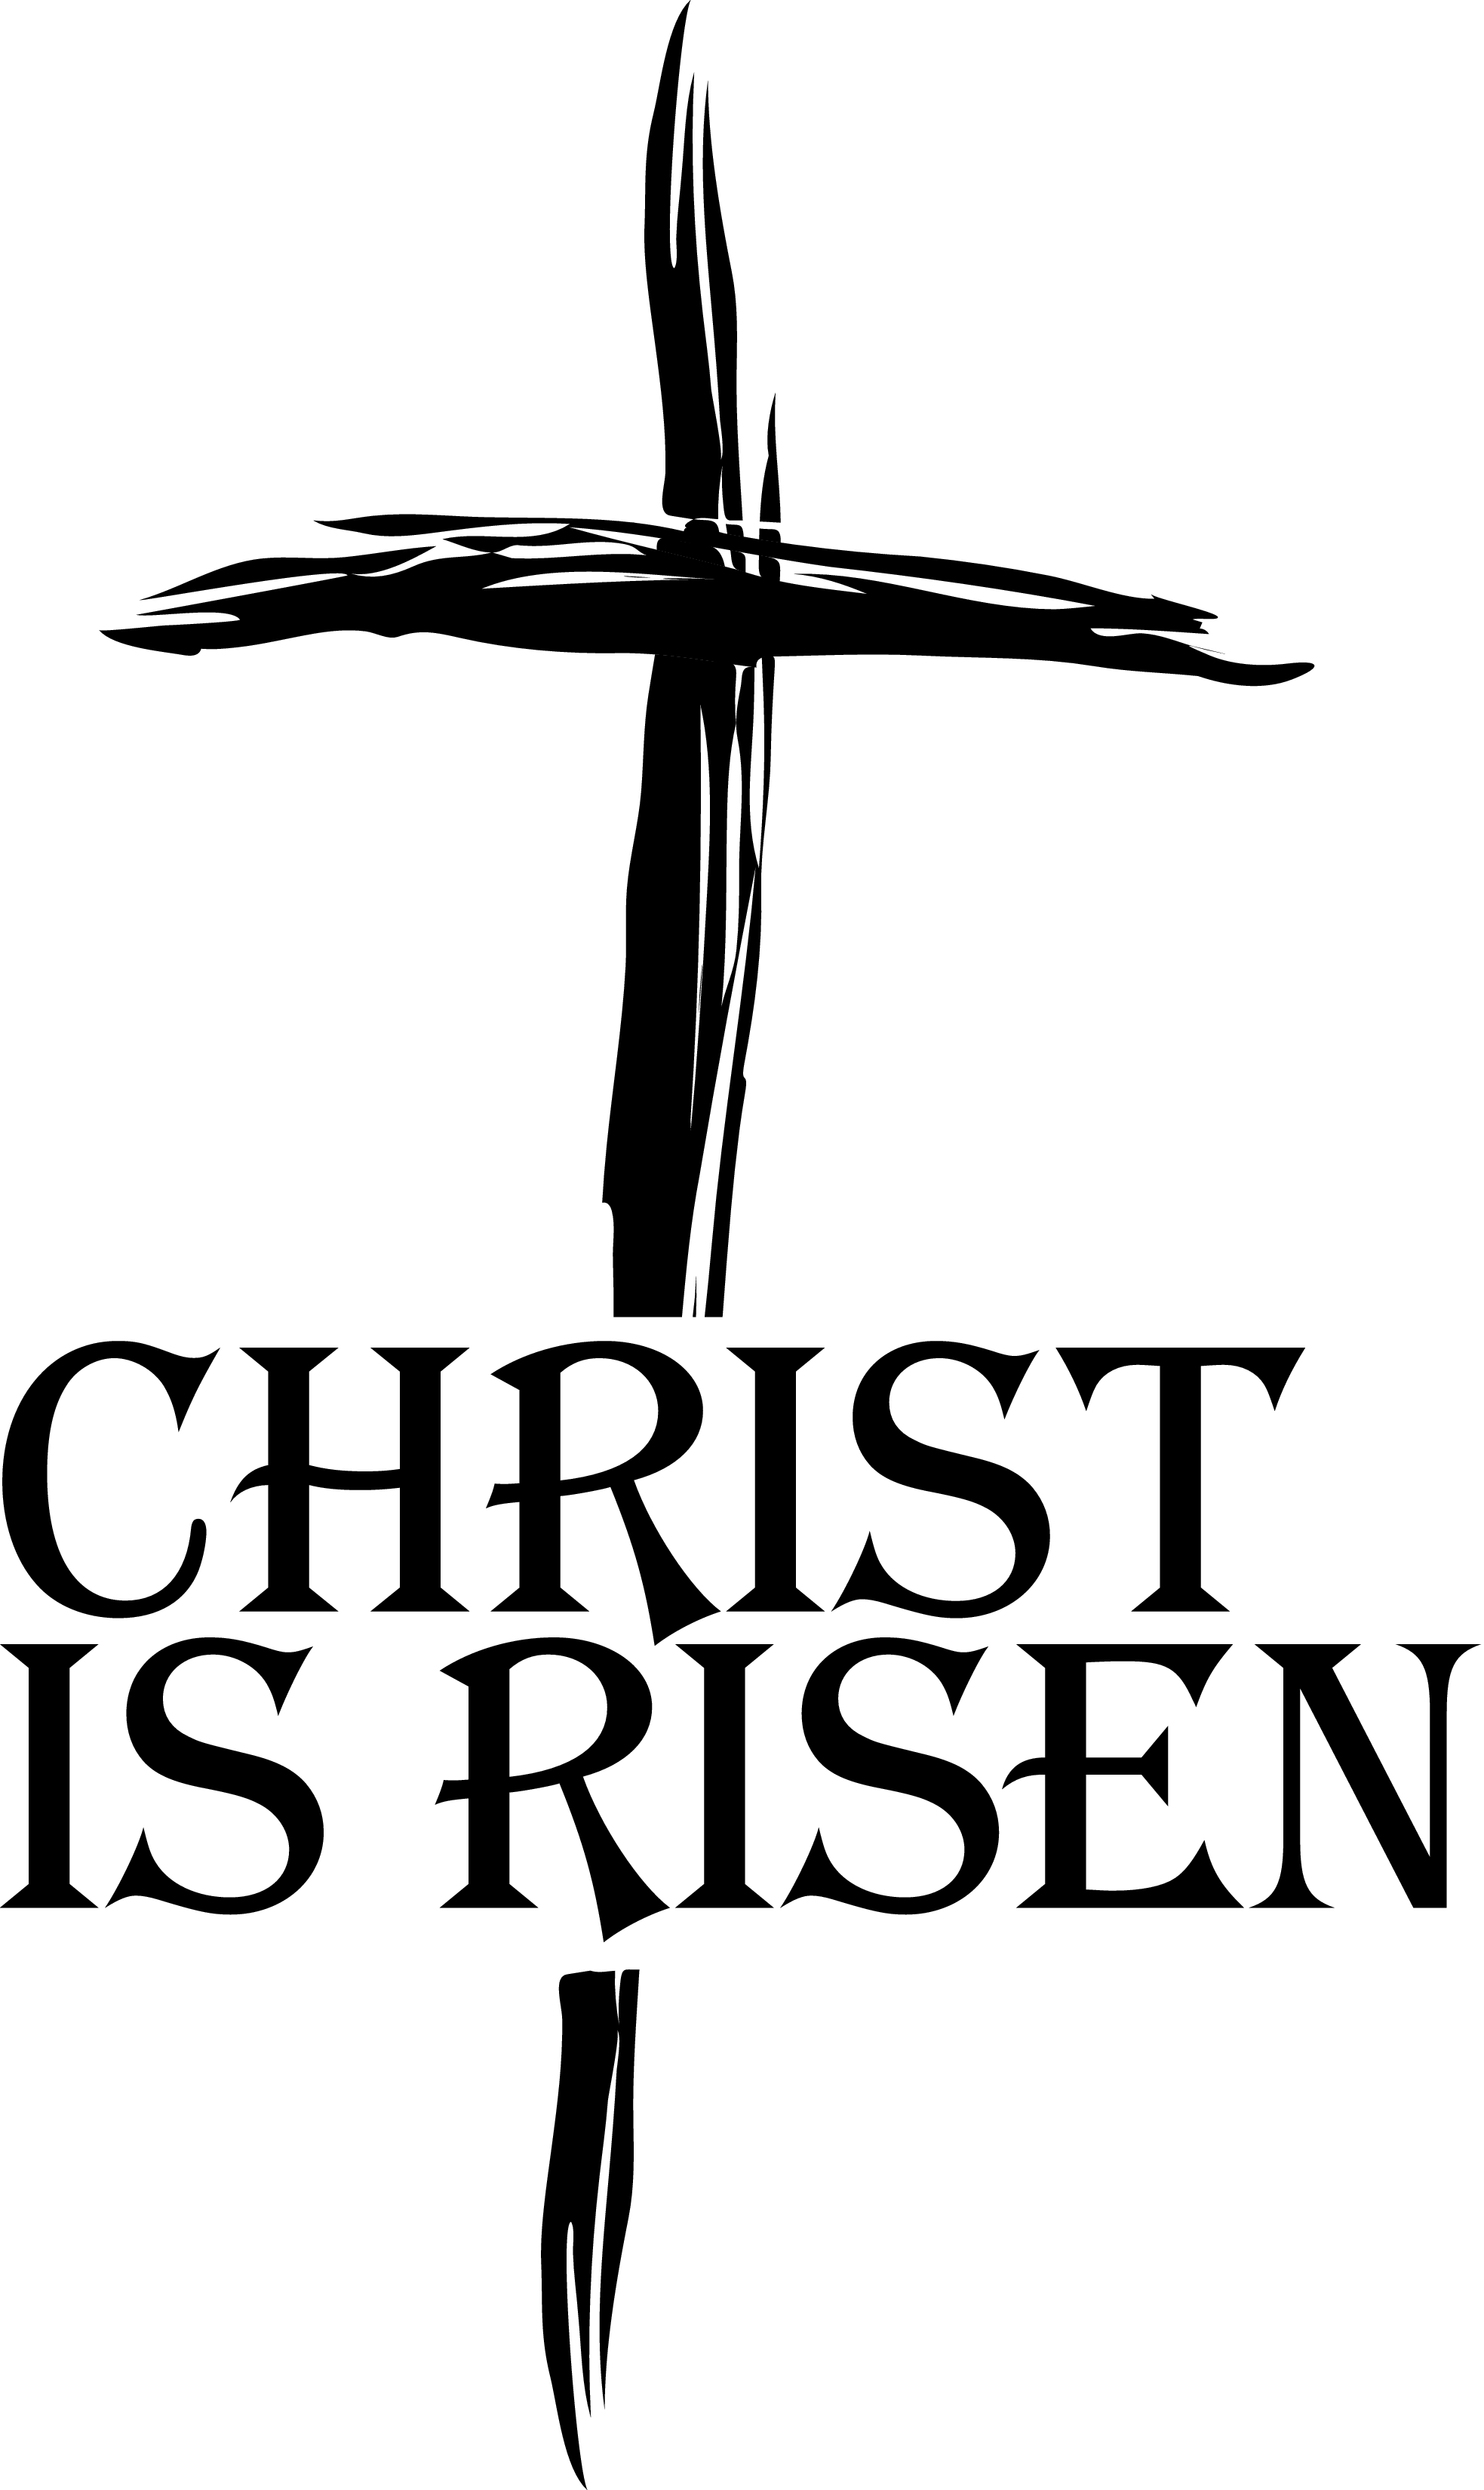 Religious Easter Clipart Jesus Risen - Clip Art Library